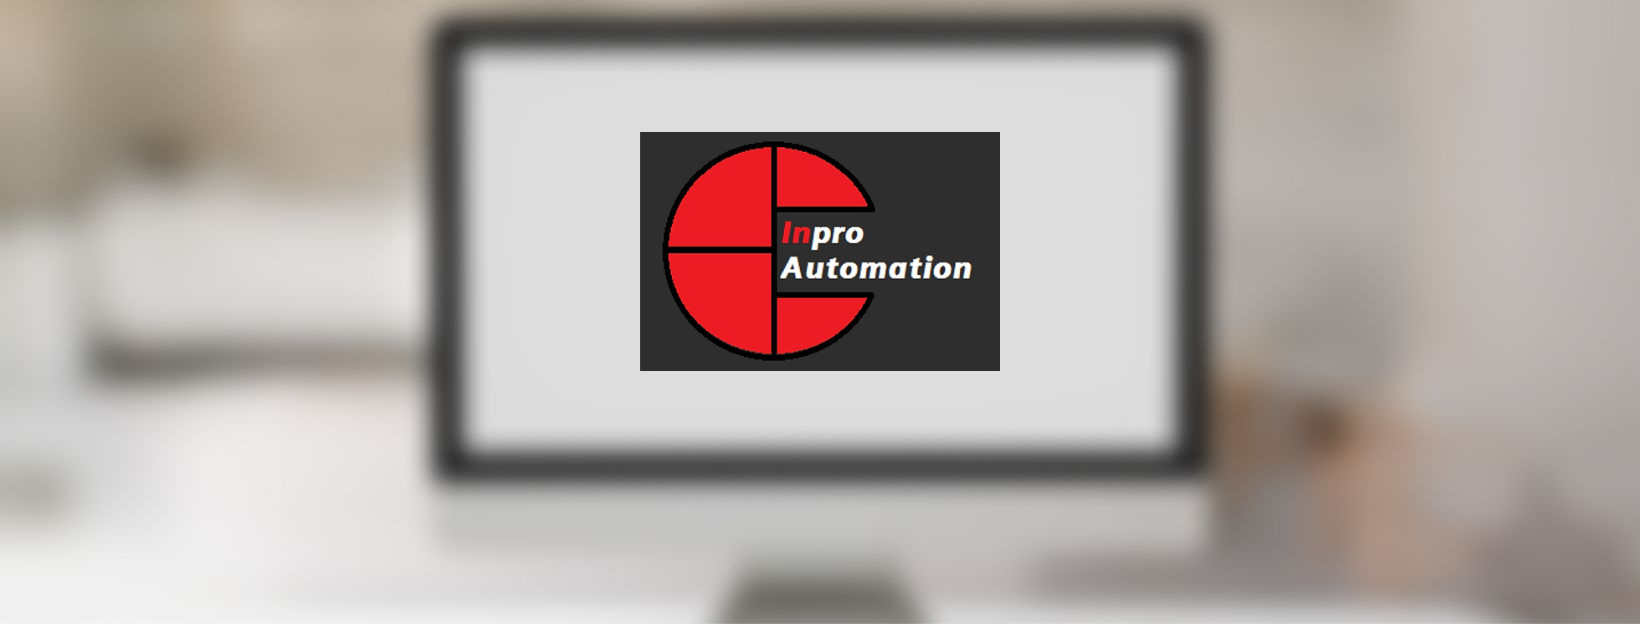 Nueva página web para Inpro Automation